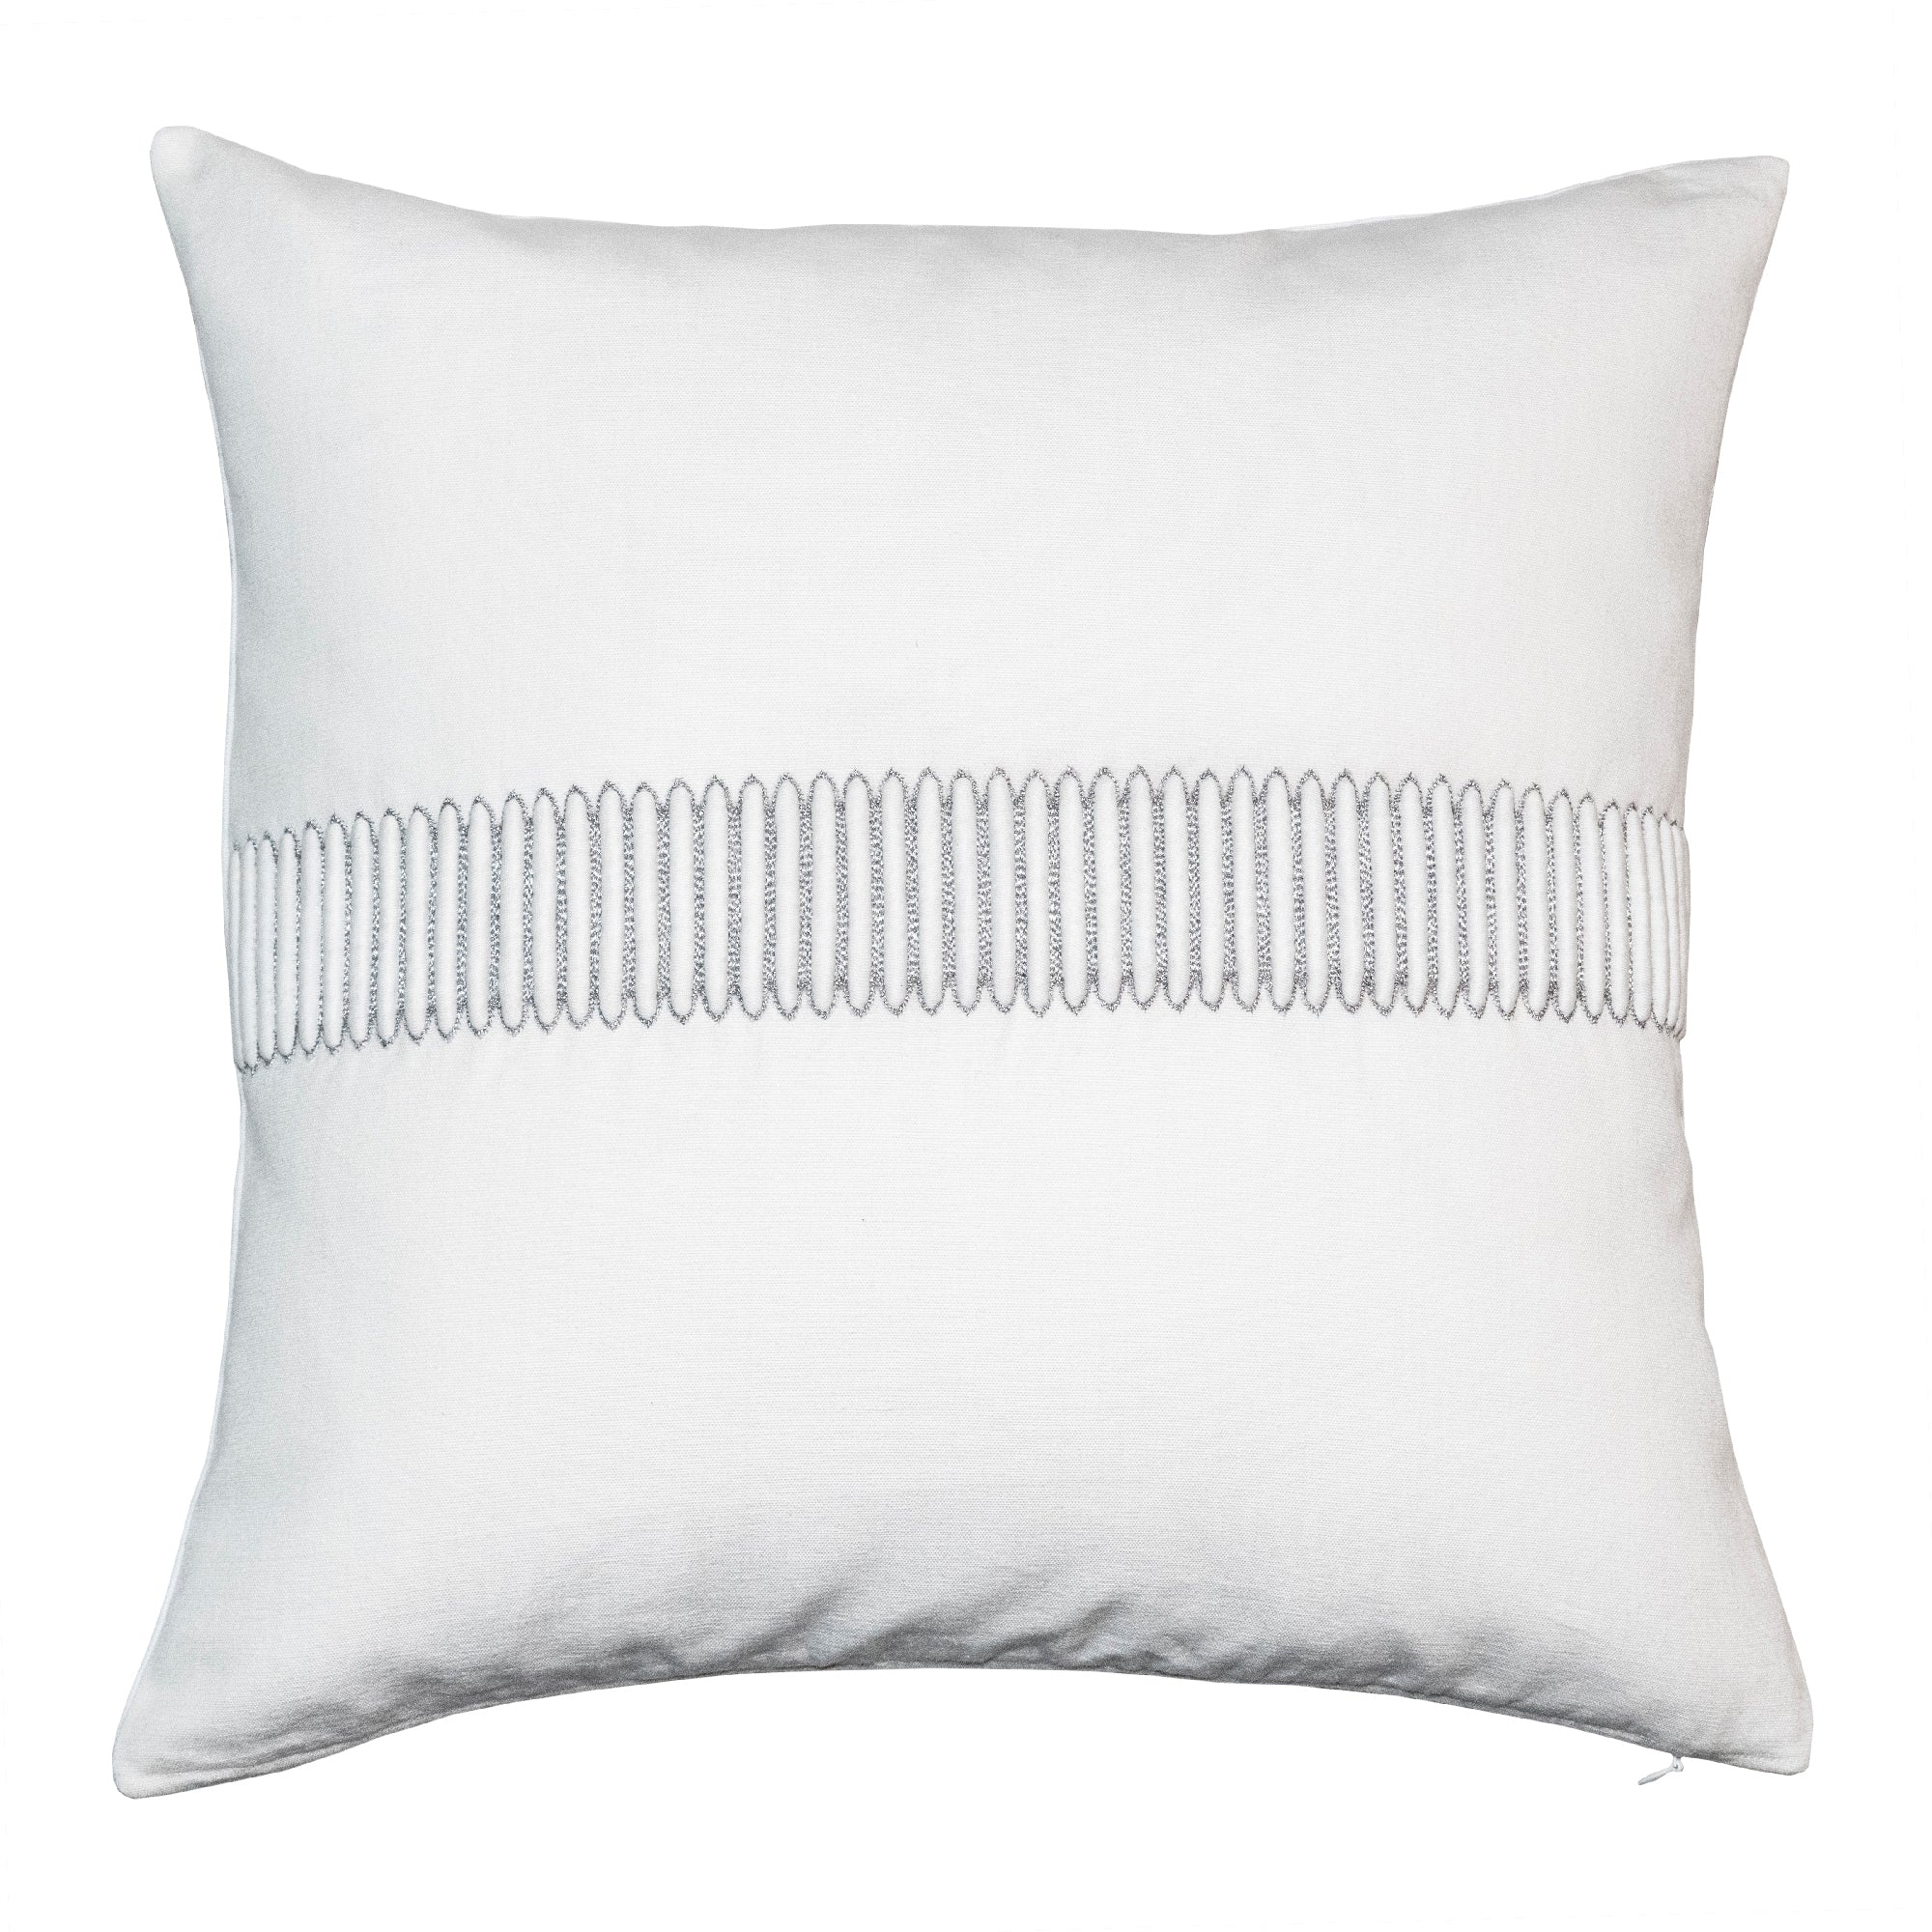 2 Nautical Color Scheme-Hand-Pieced, Thick Cotton Duck Pillows